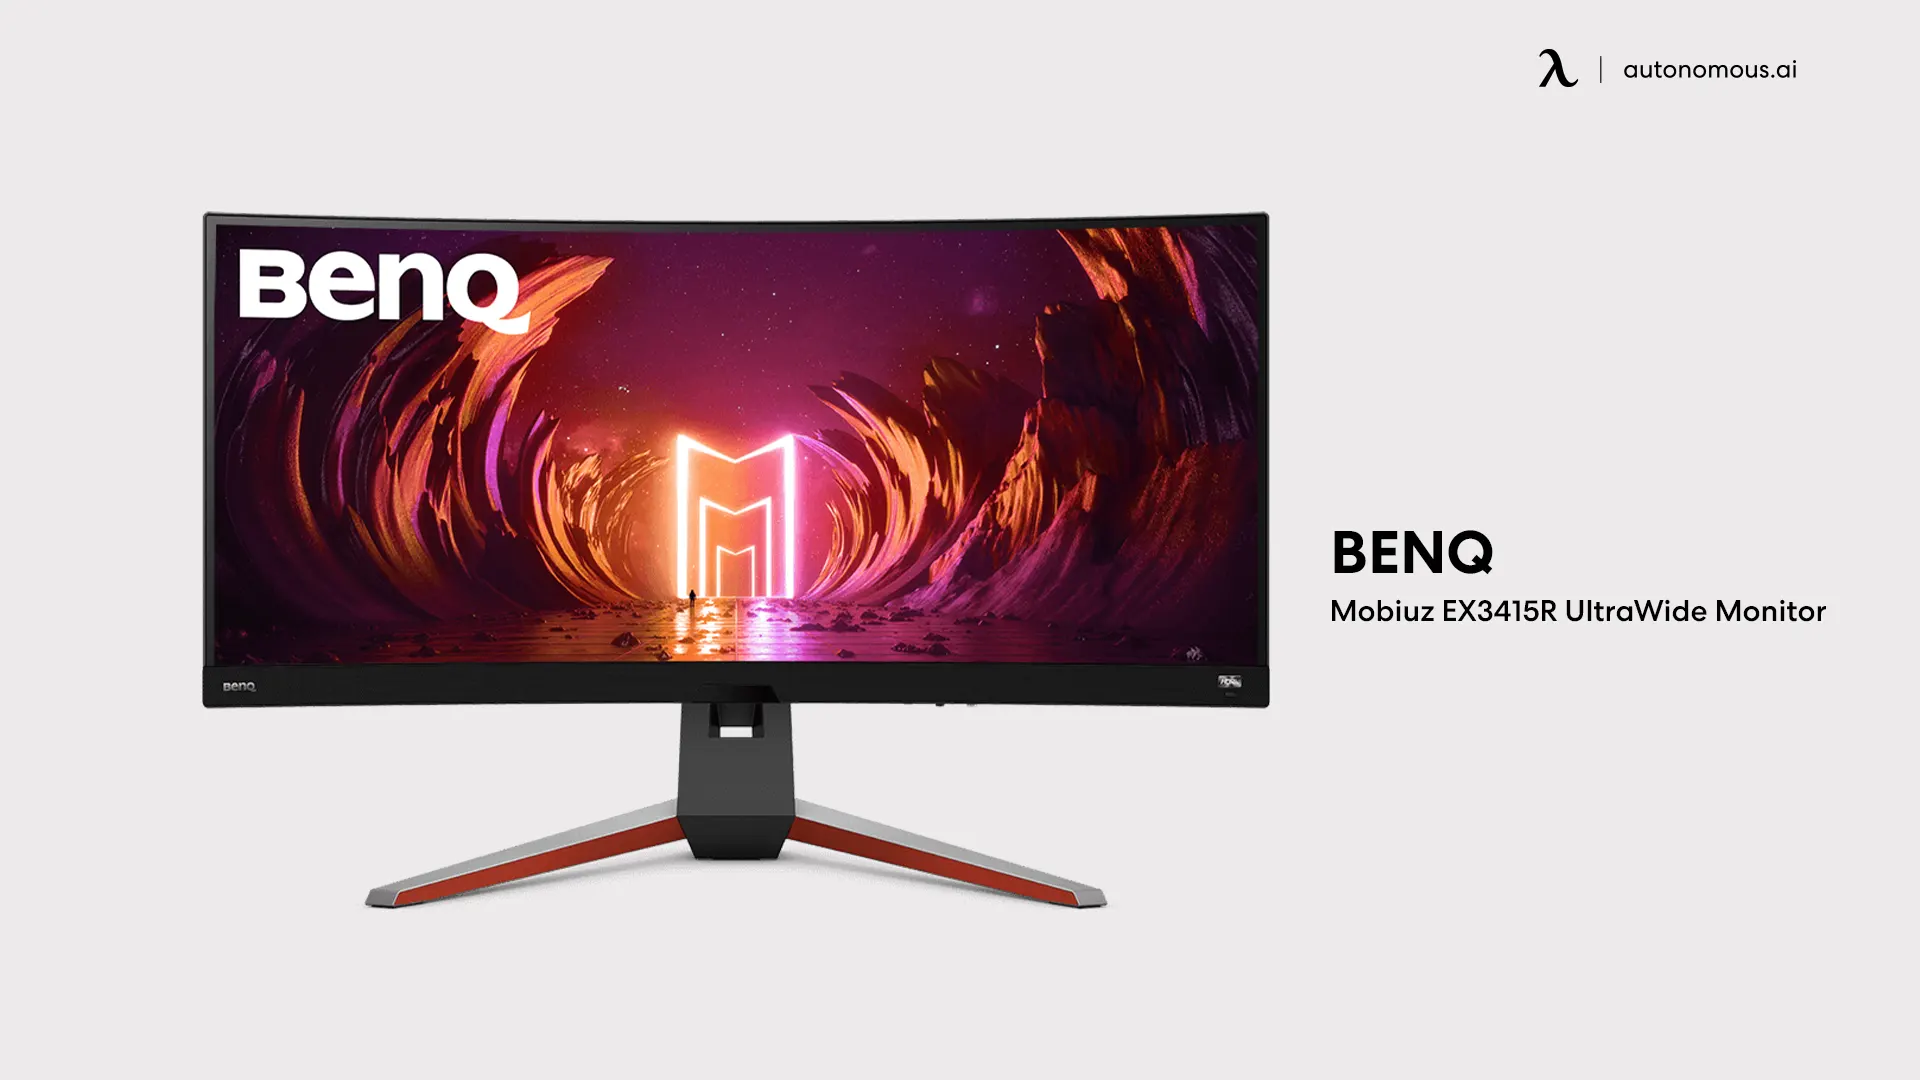 BenQ Mobiuz EX3415R wide monitor